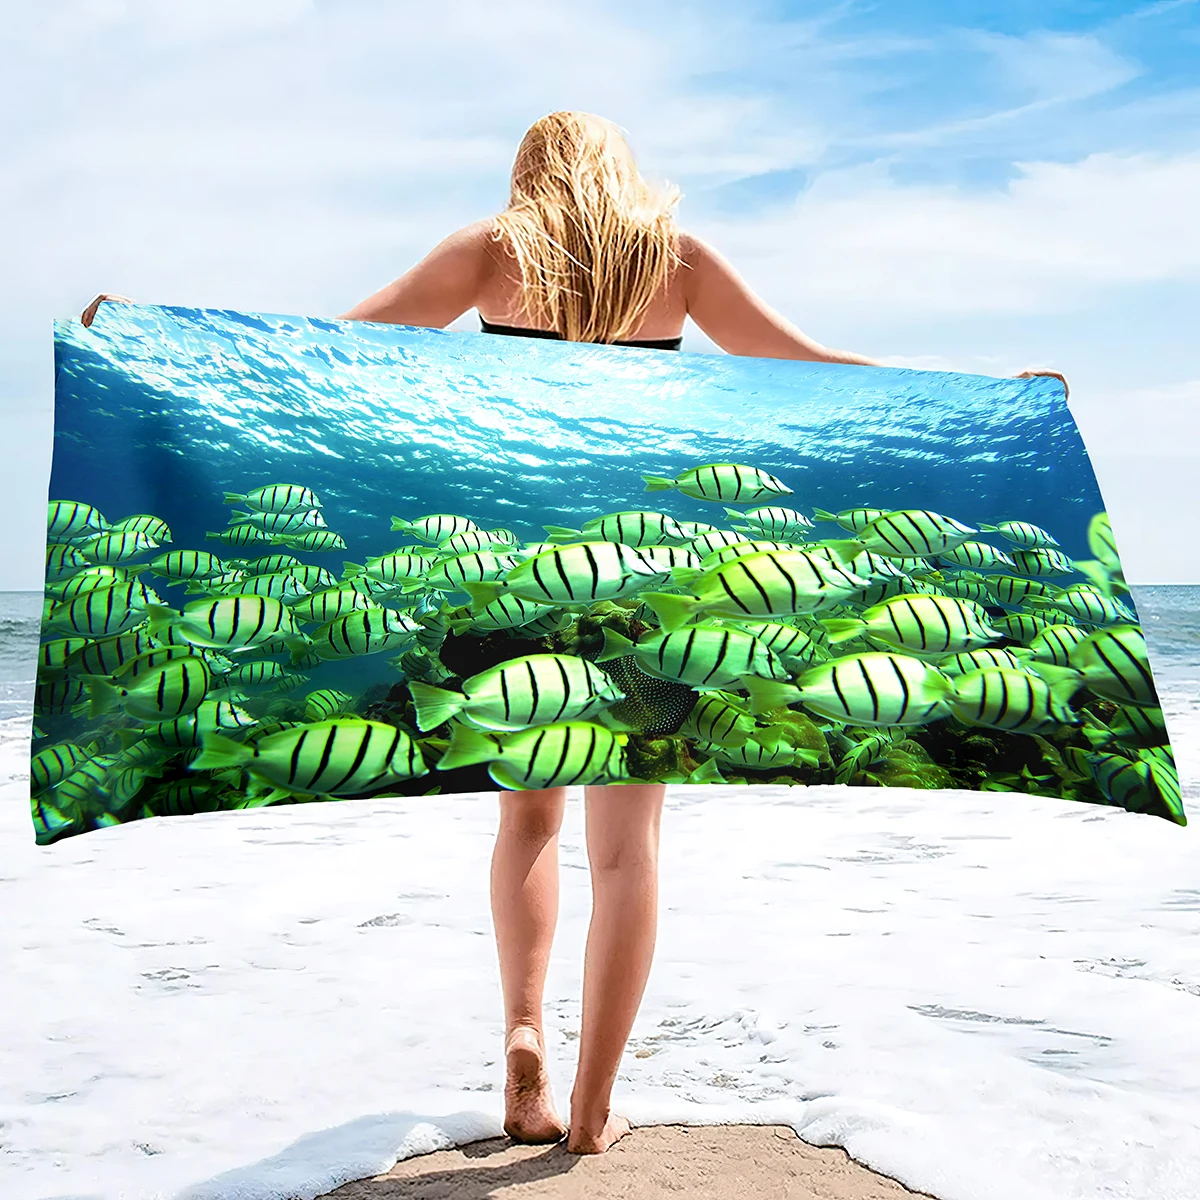 

Natural Scenery SeaWorld Beach Towel,Oversized Microfiber Pool Towel forTravel,Quick Dry Towel Lightweight Sand Proof Bath Towel